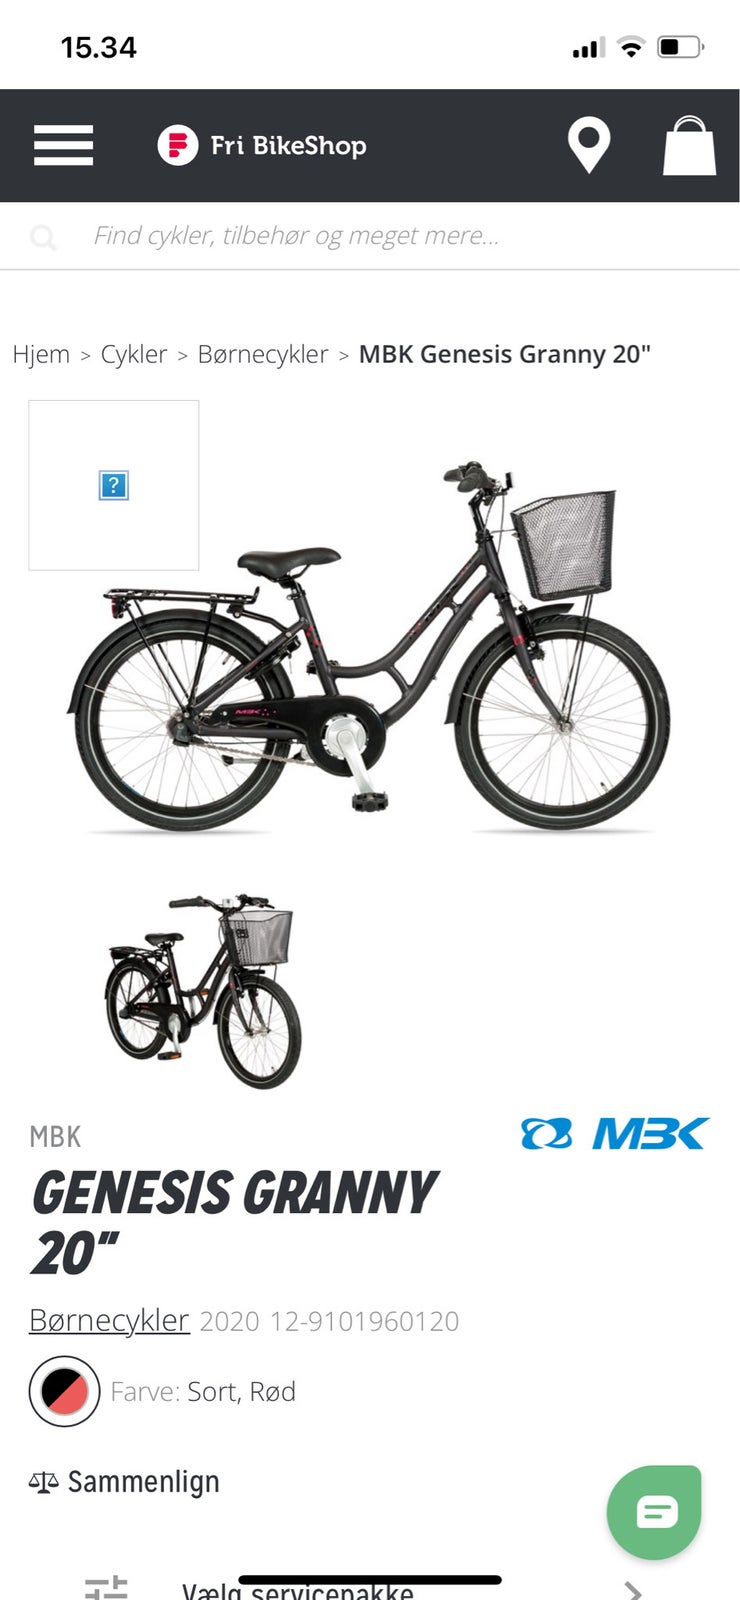 Pigecykel, classic cykel, MBK